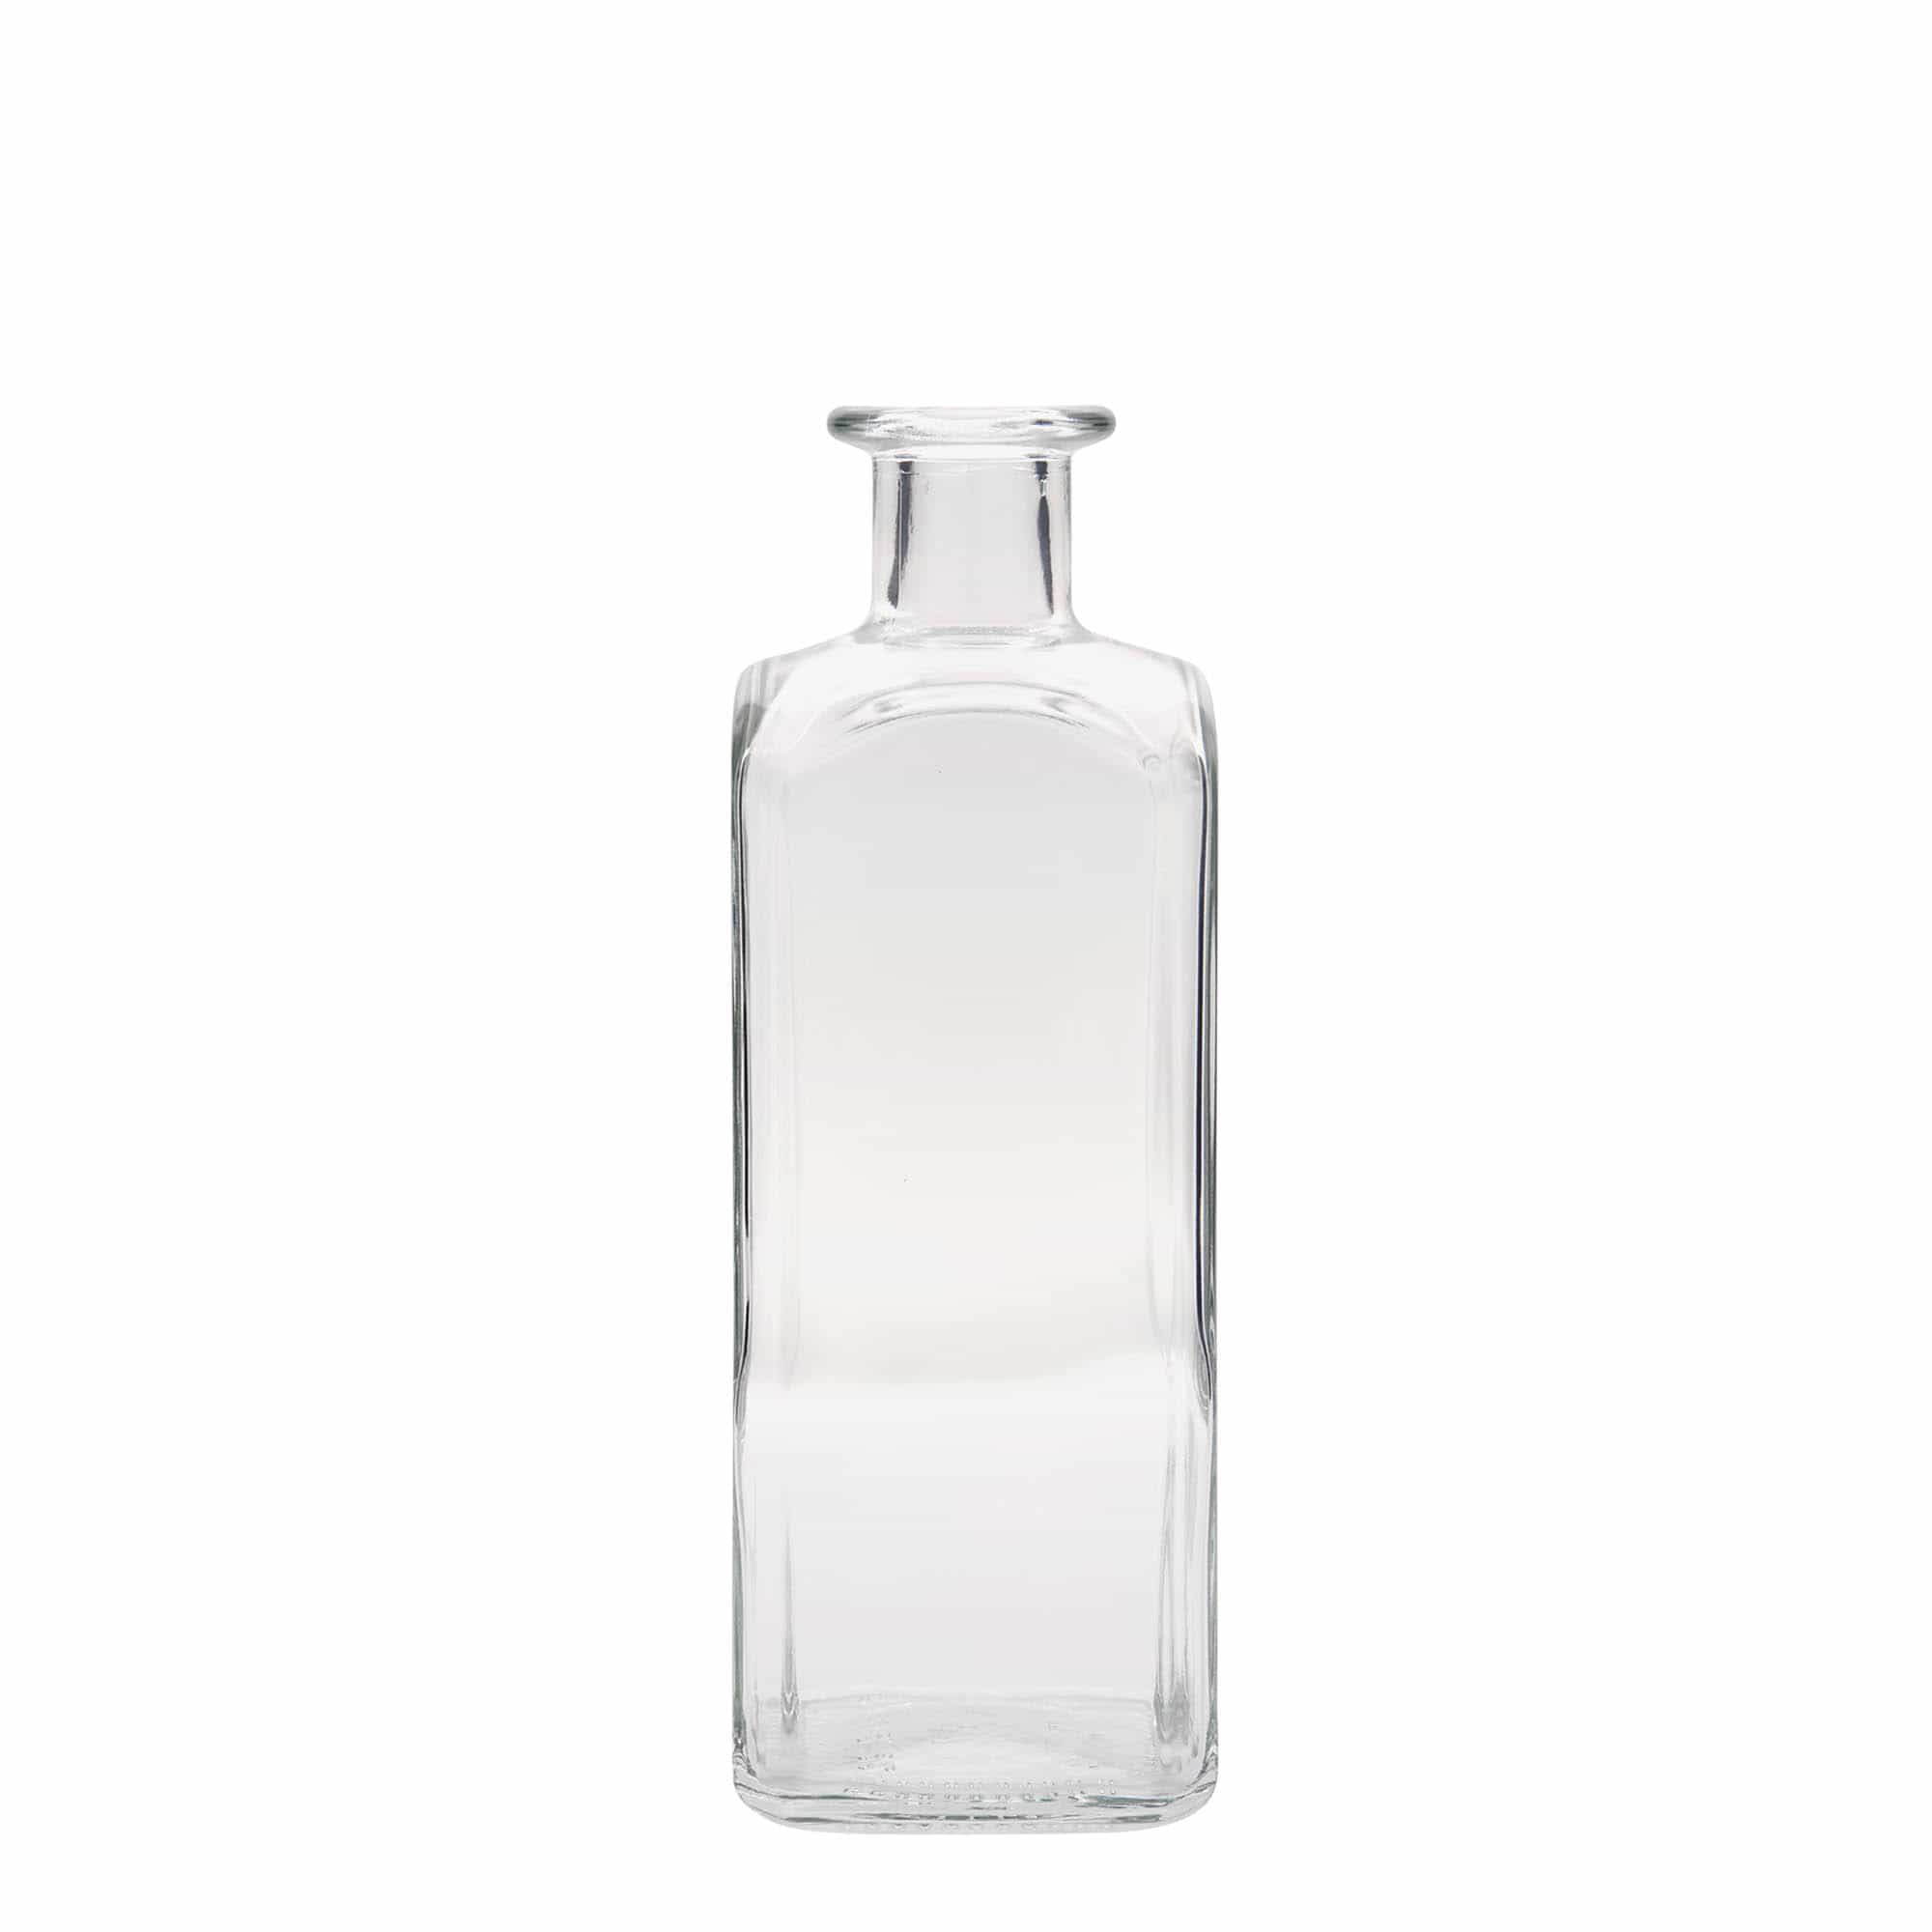 500 ml glass apothecary bottle ‘Carré’, square, closure: cork